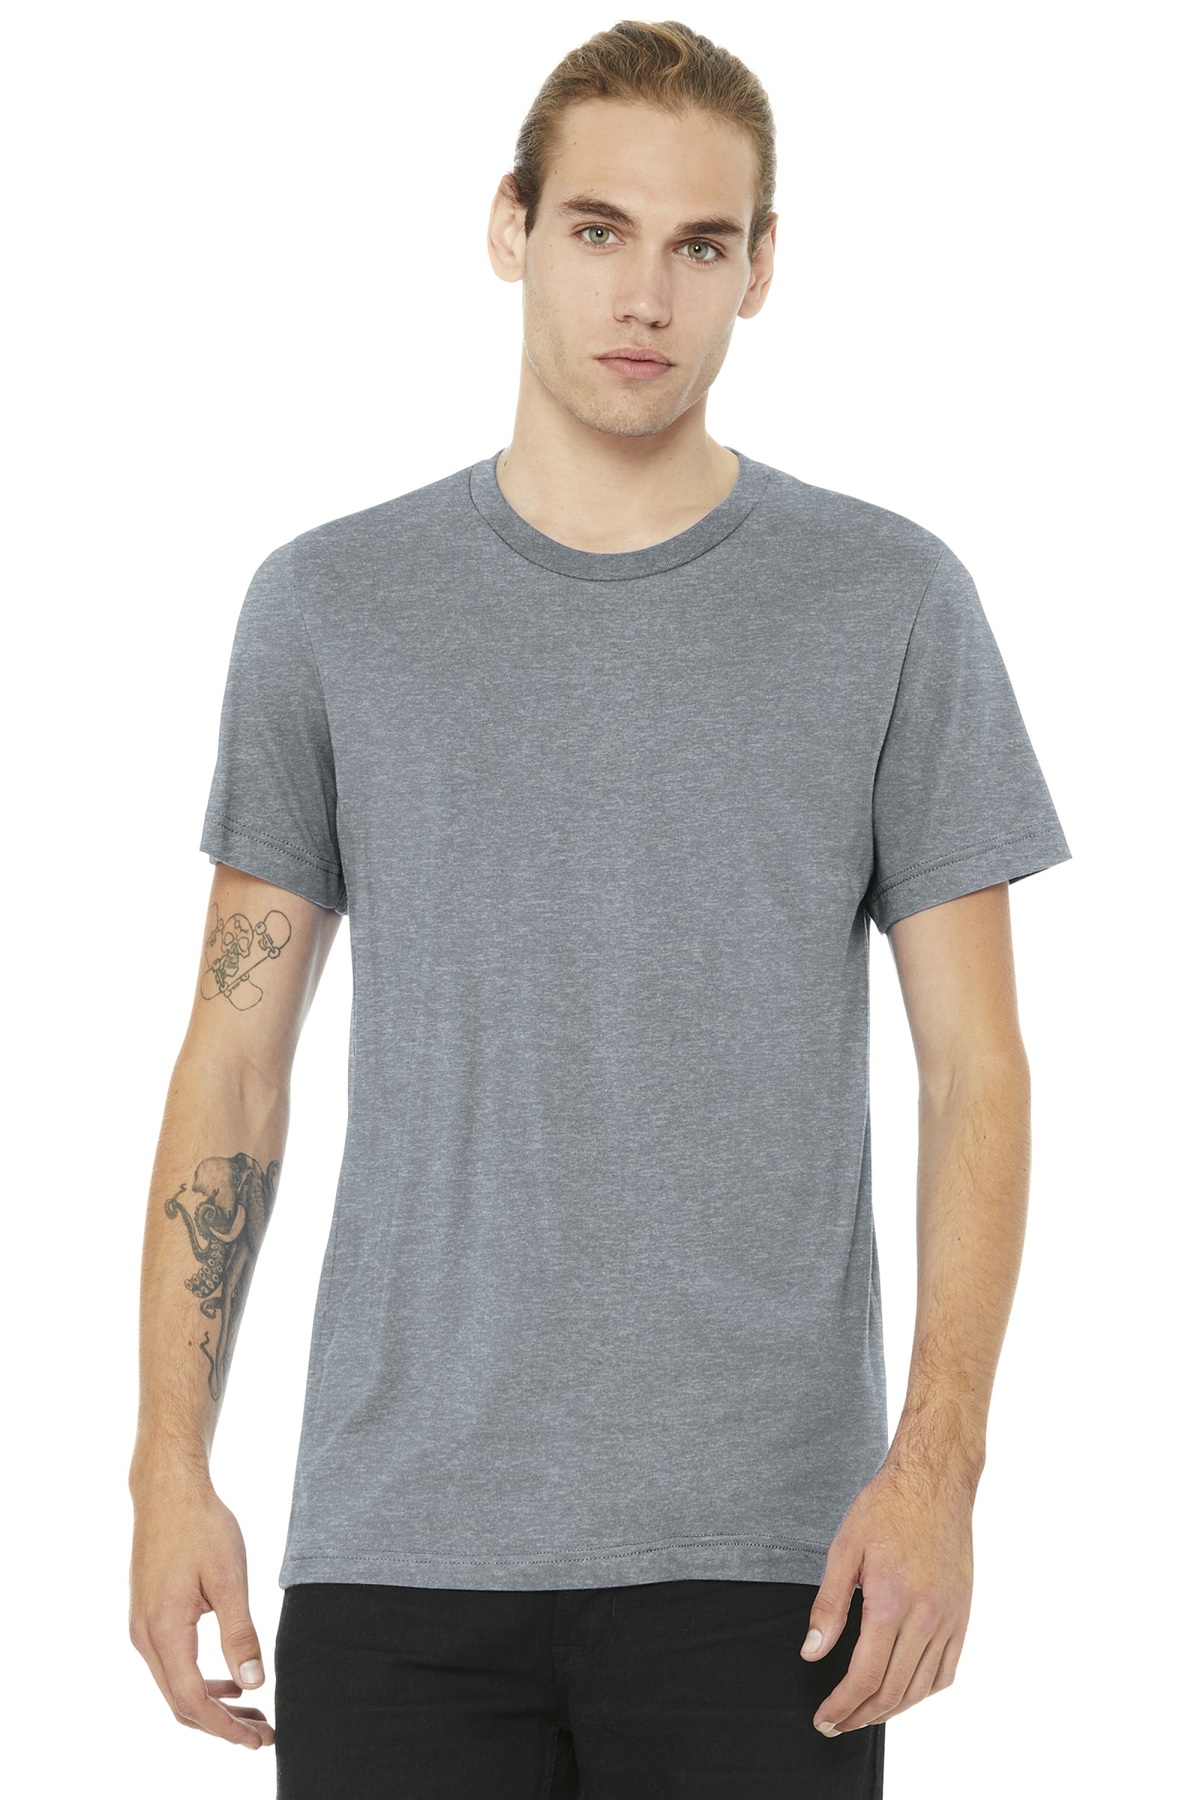 Bella + Canvas Embroidered Men's Ringspun Cotton T-Shirt - Queensboro